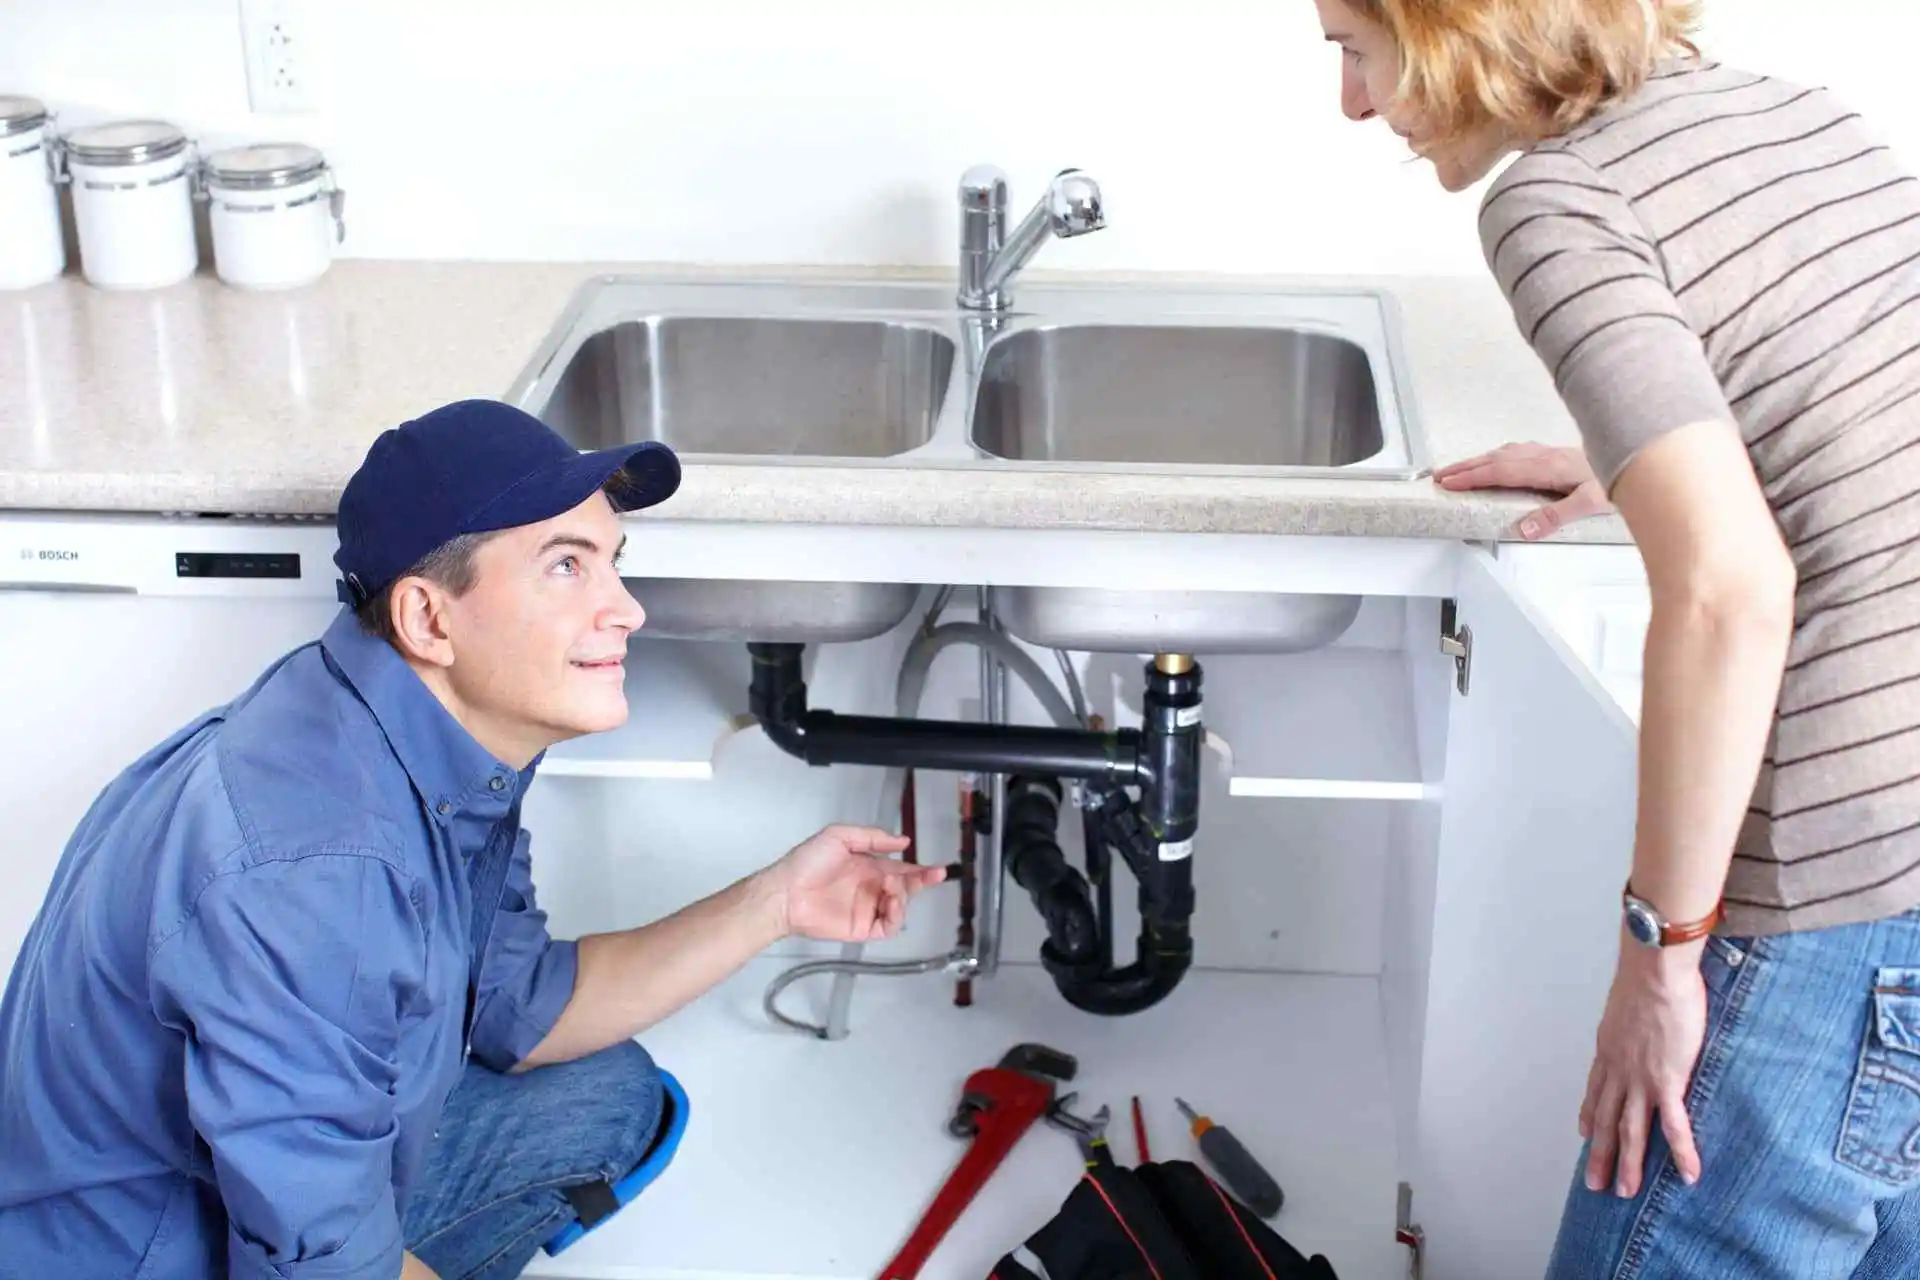 Plumbing-Delaware home improvement services company